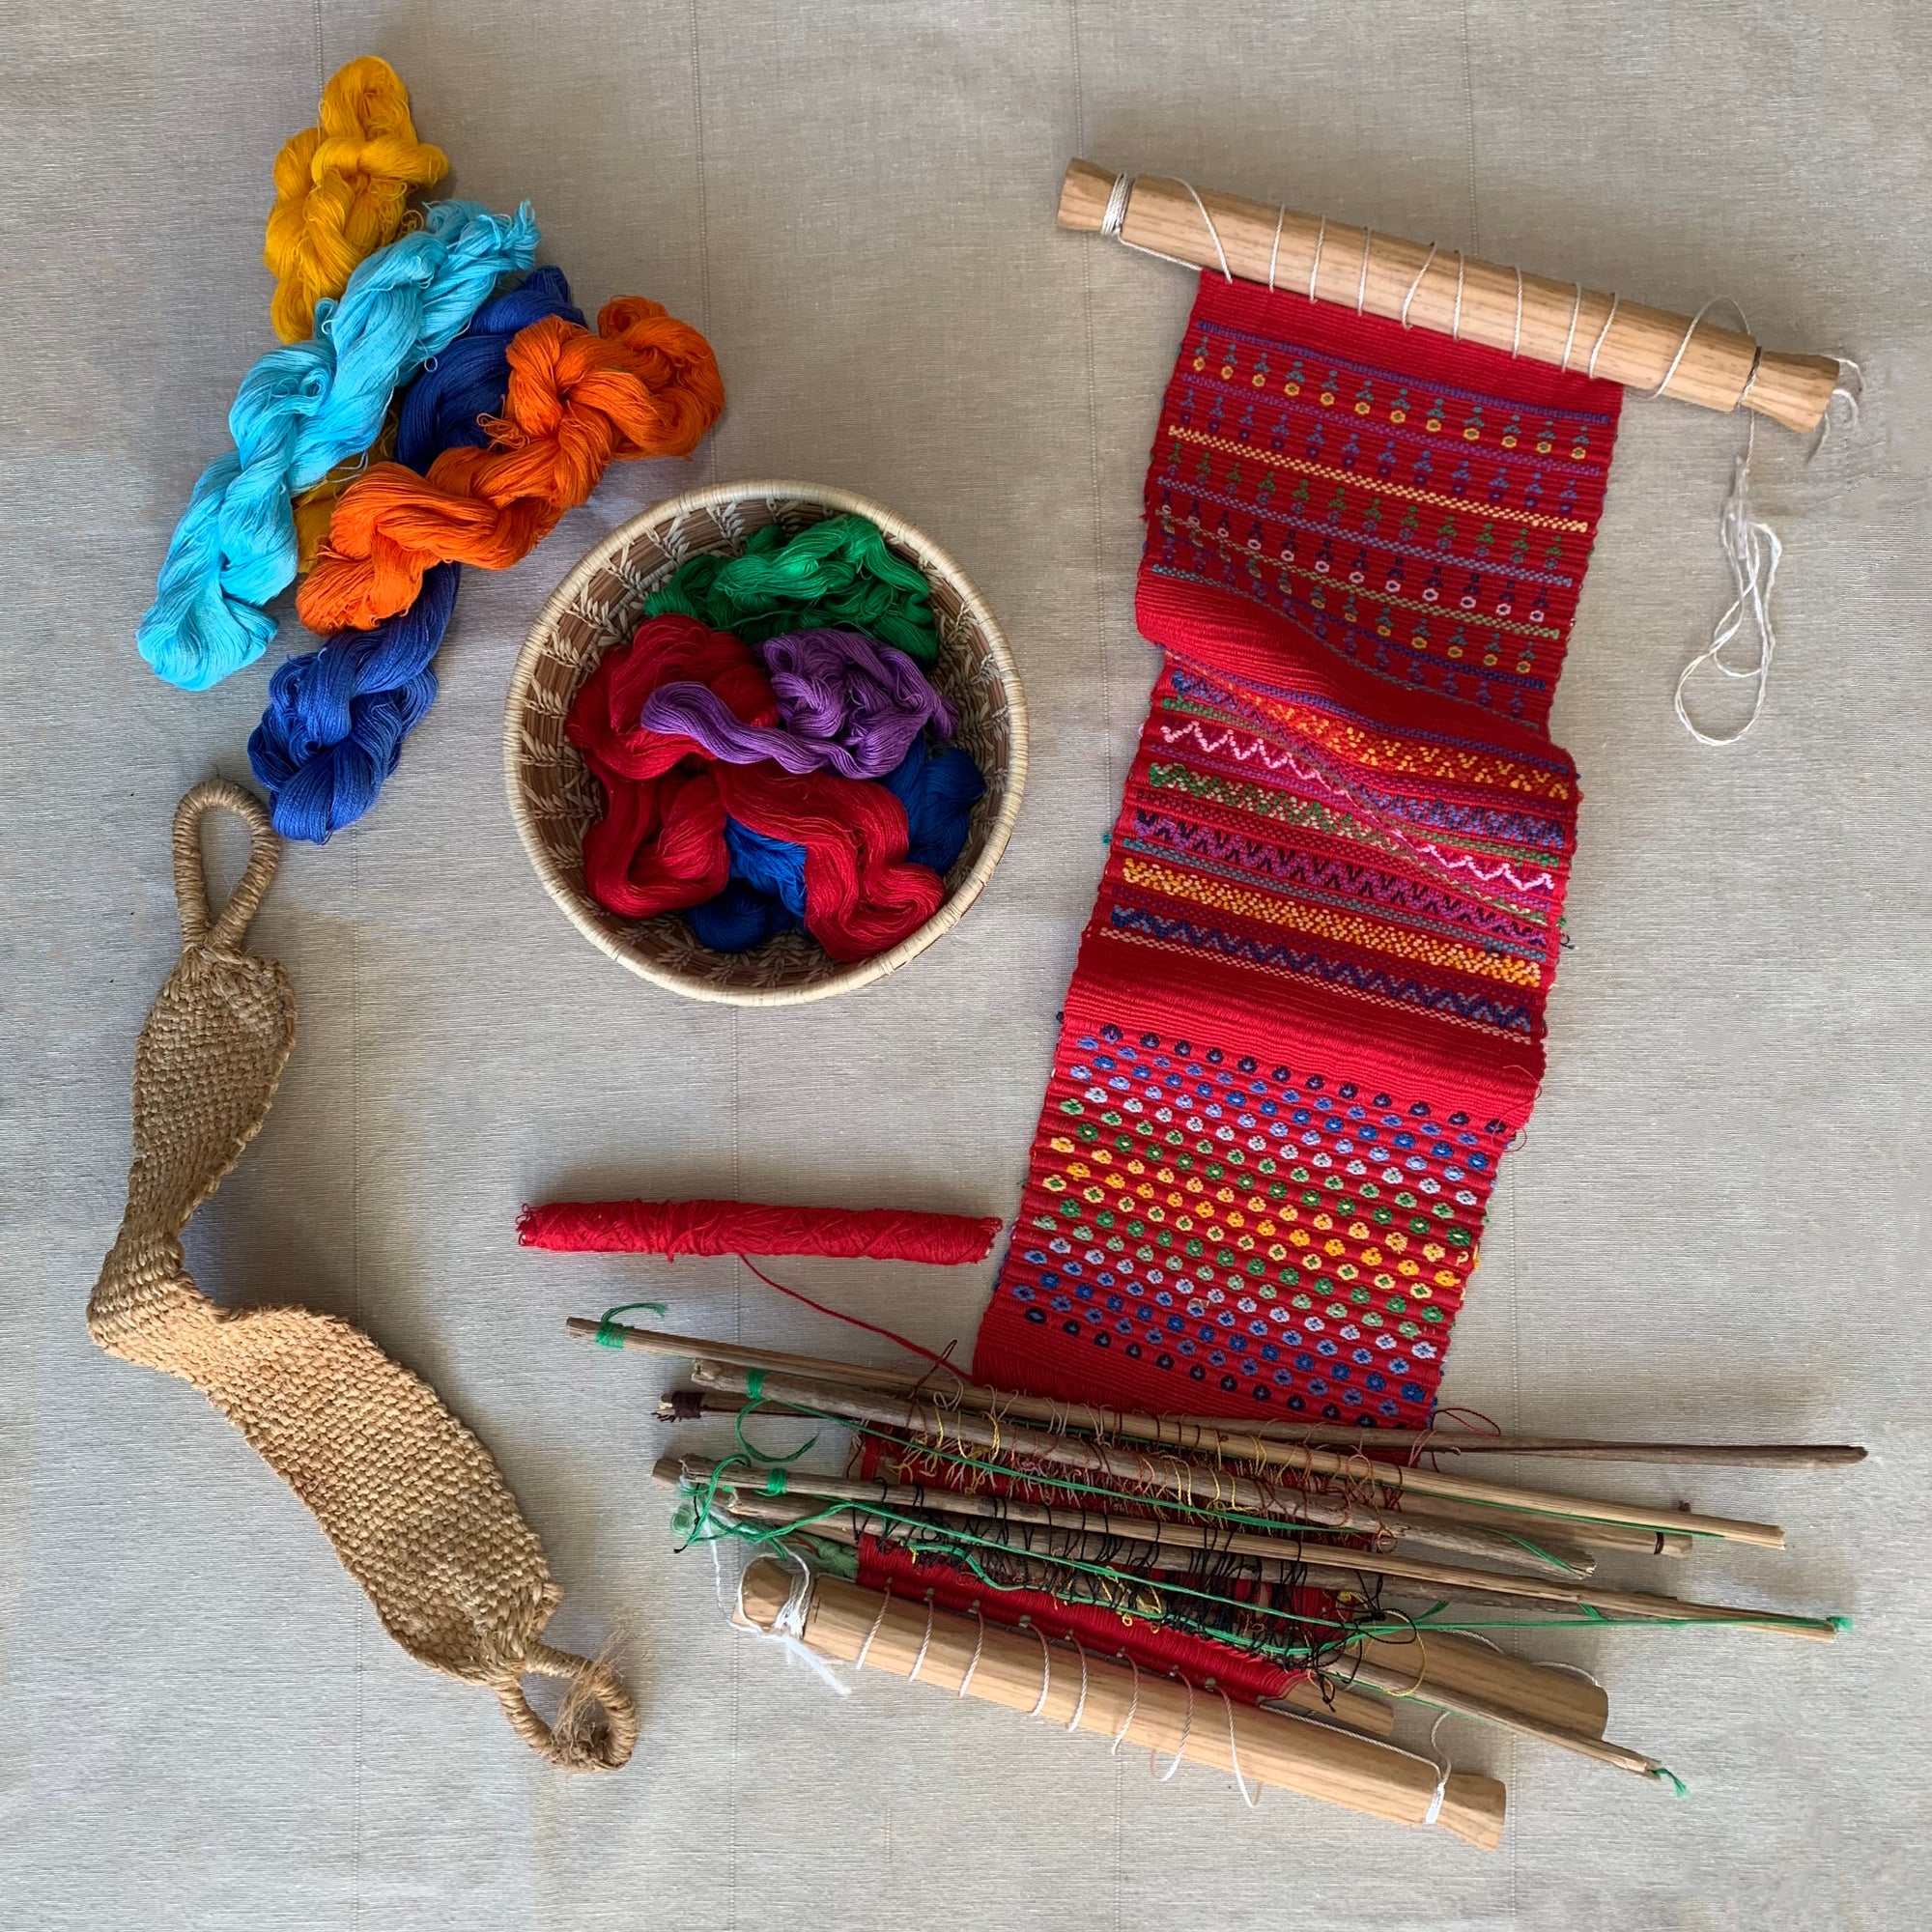 Mayan Hands  Handmade Fair Trade Gifts from Guatemala